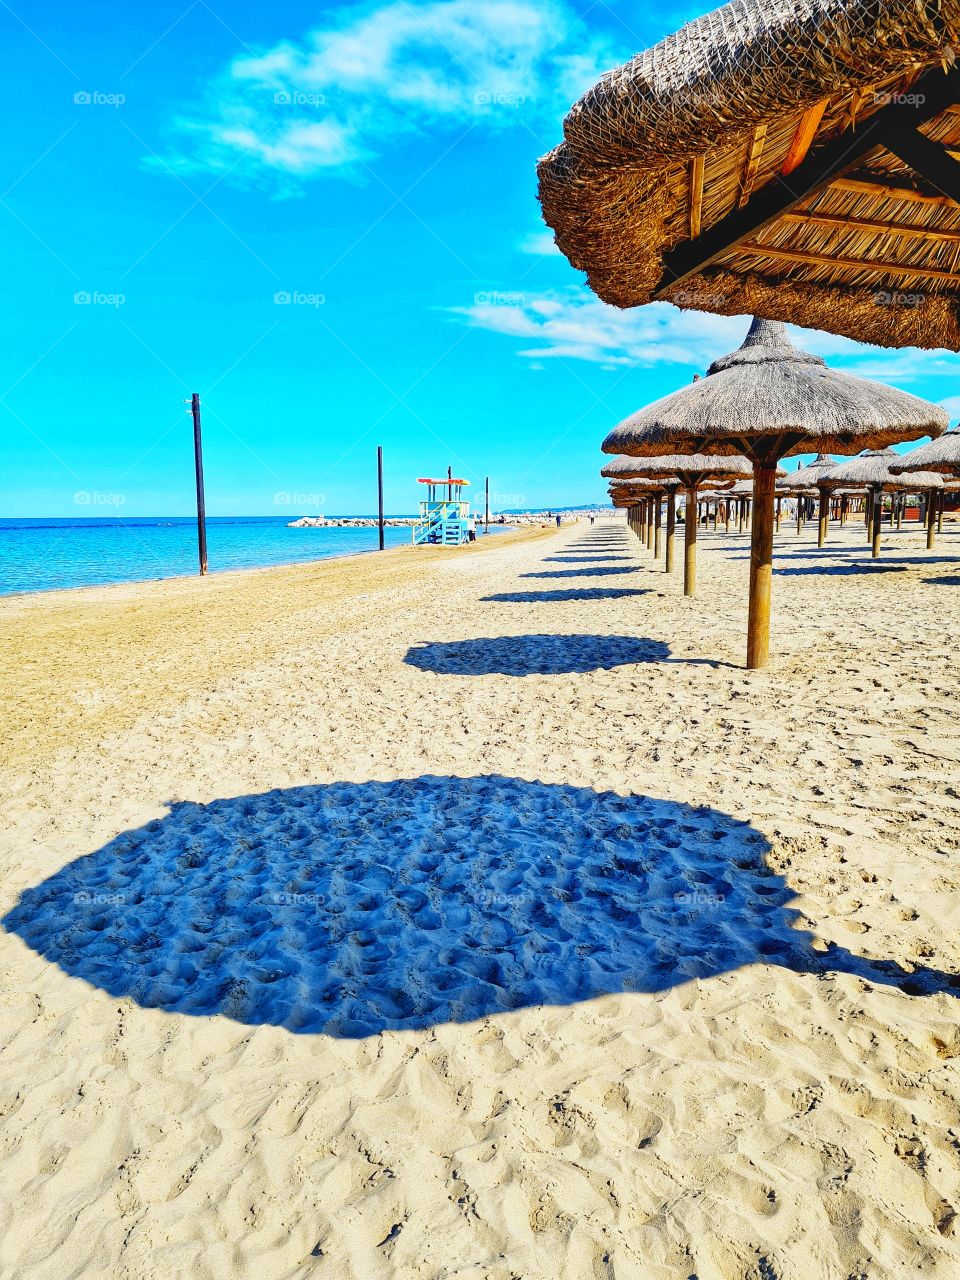 shadows of beach umbrellas